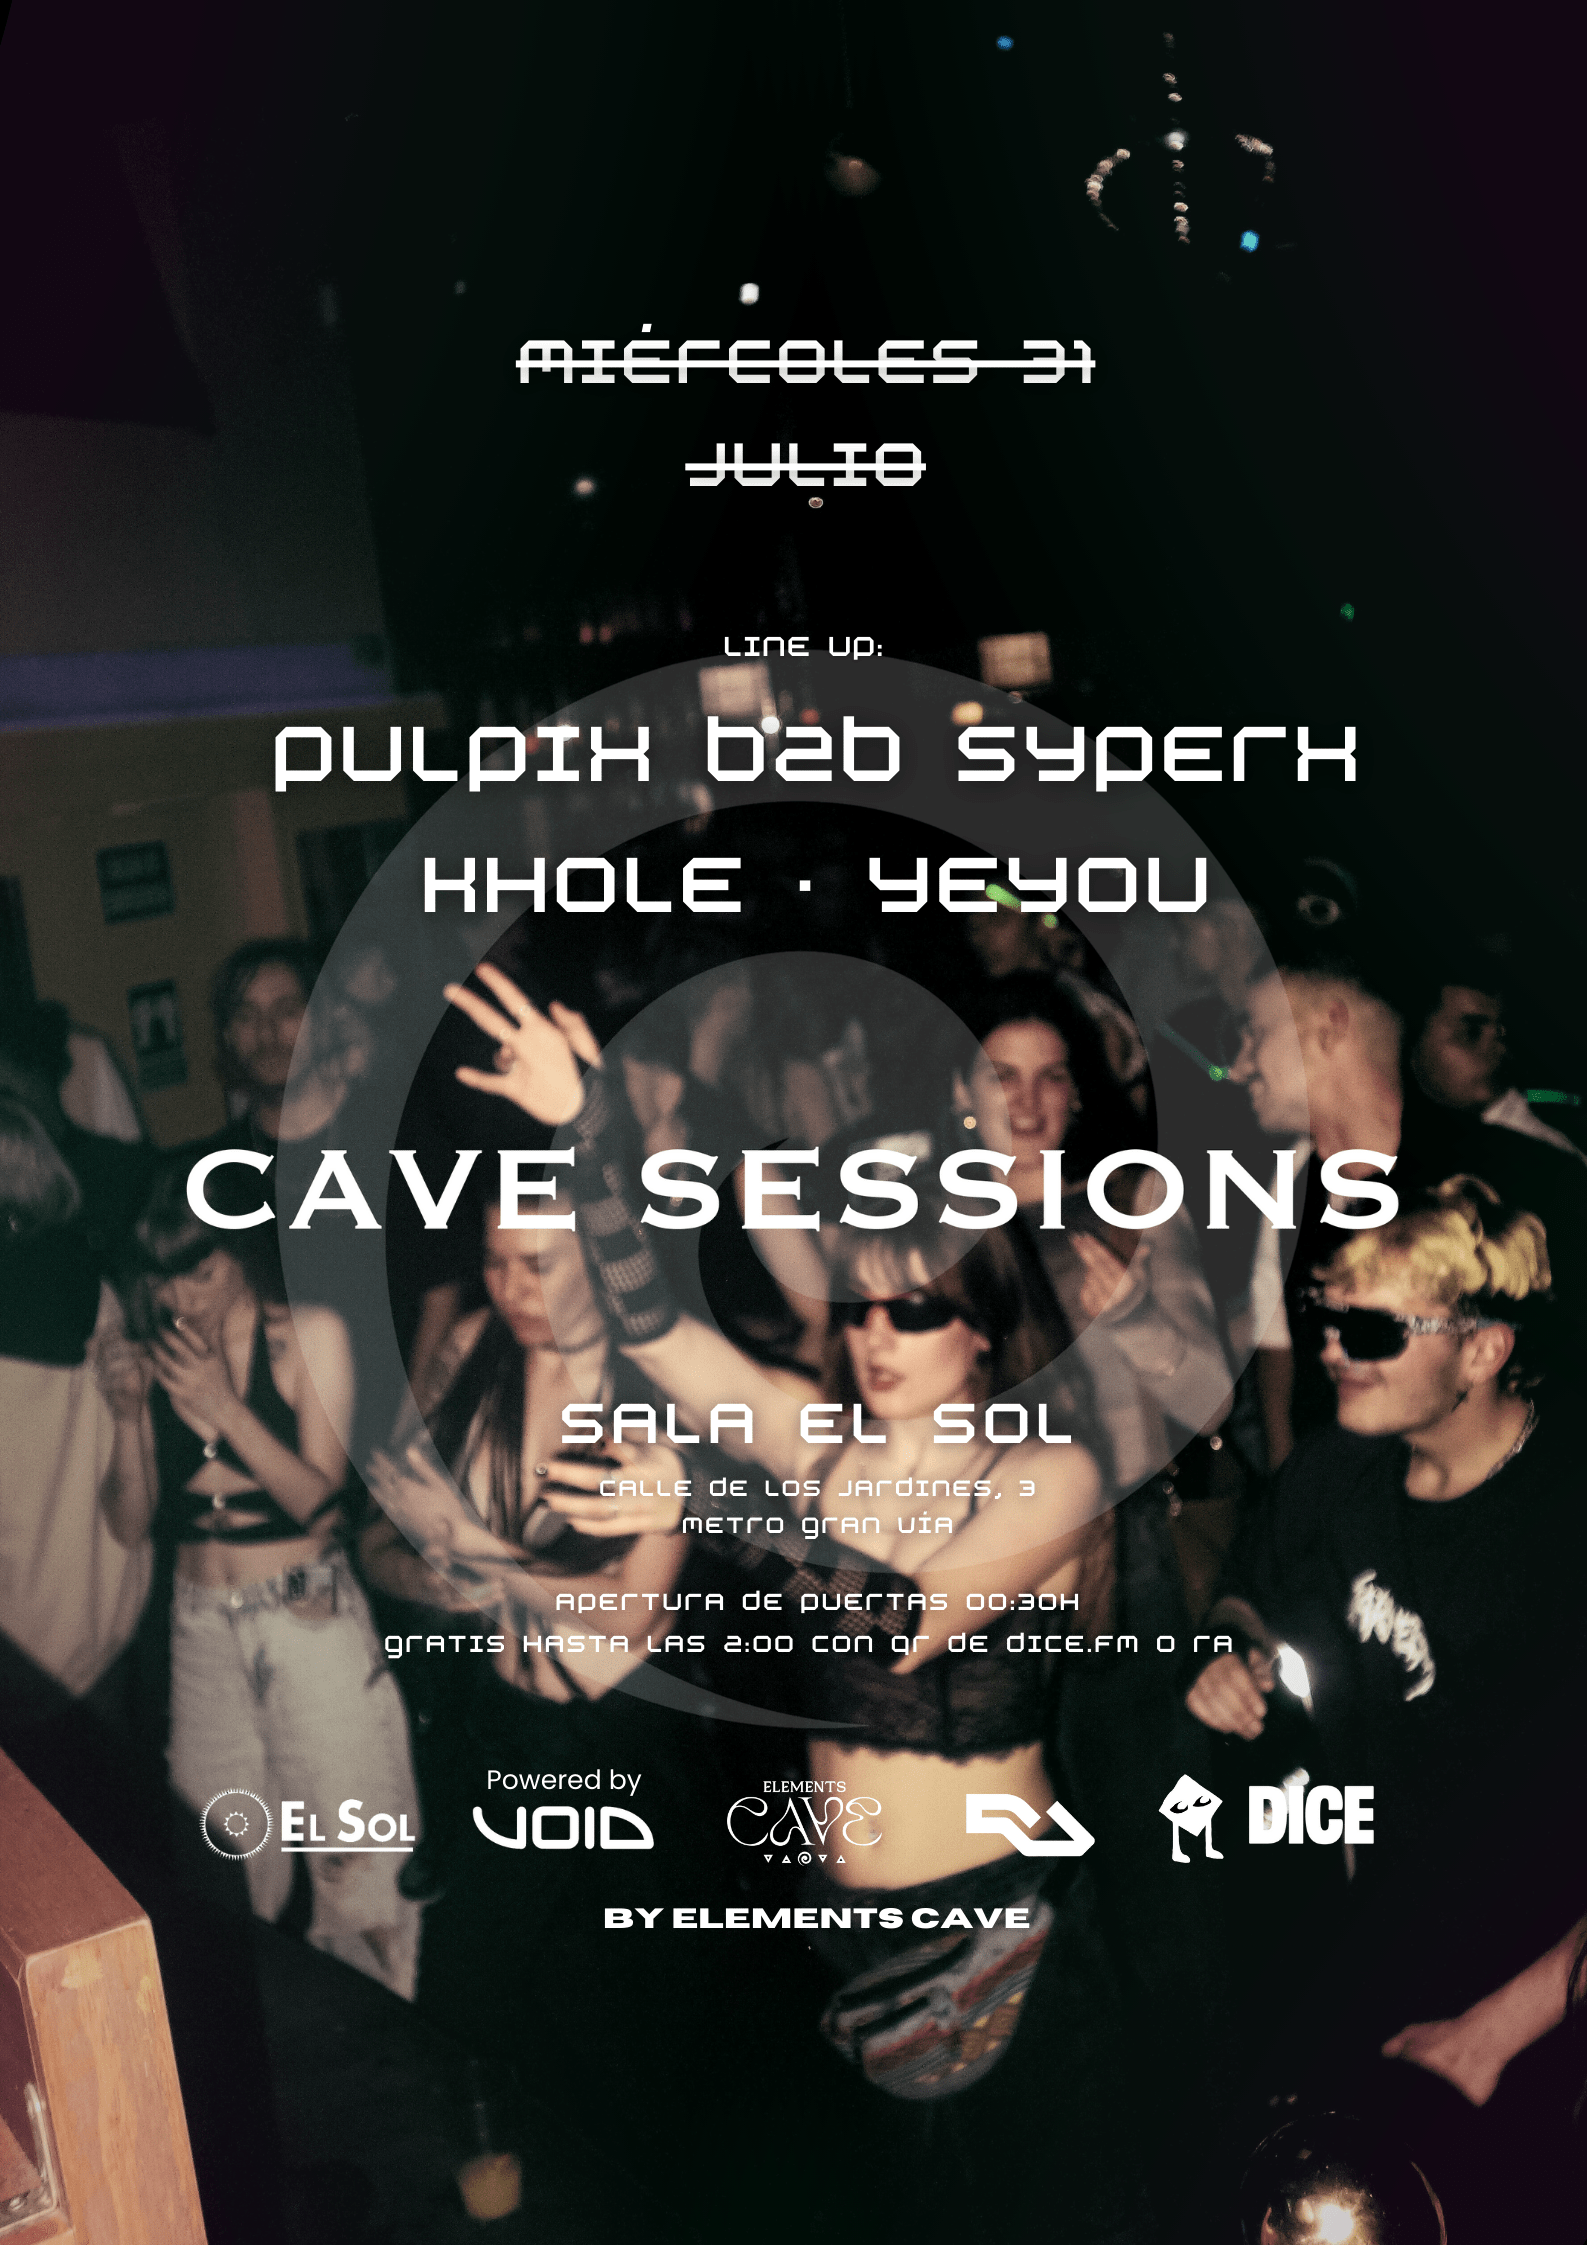 Cave Sessions: Pulpix b2b Syperx, Khole, Yeyou